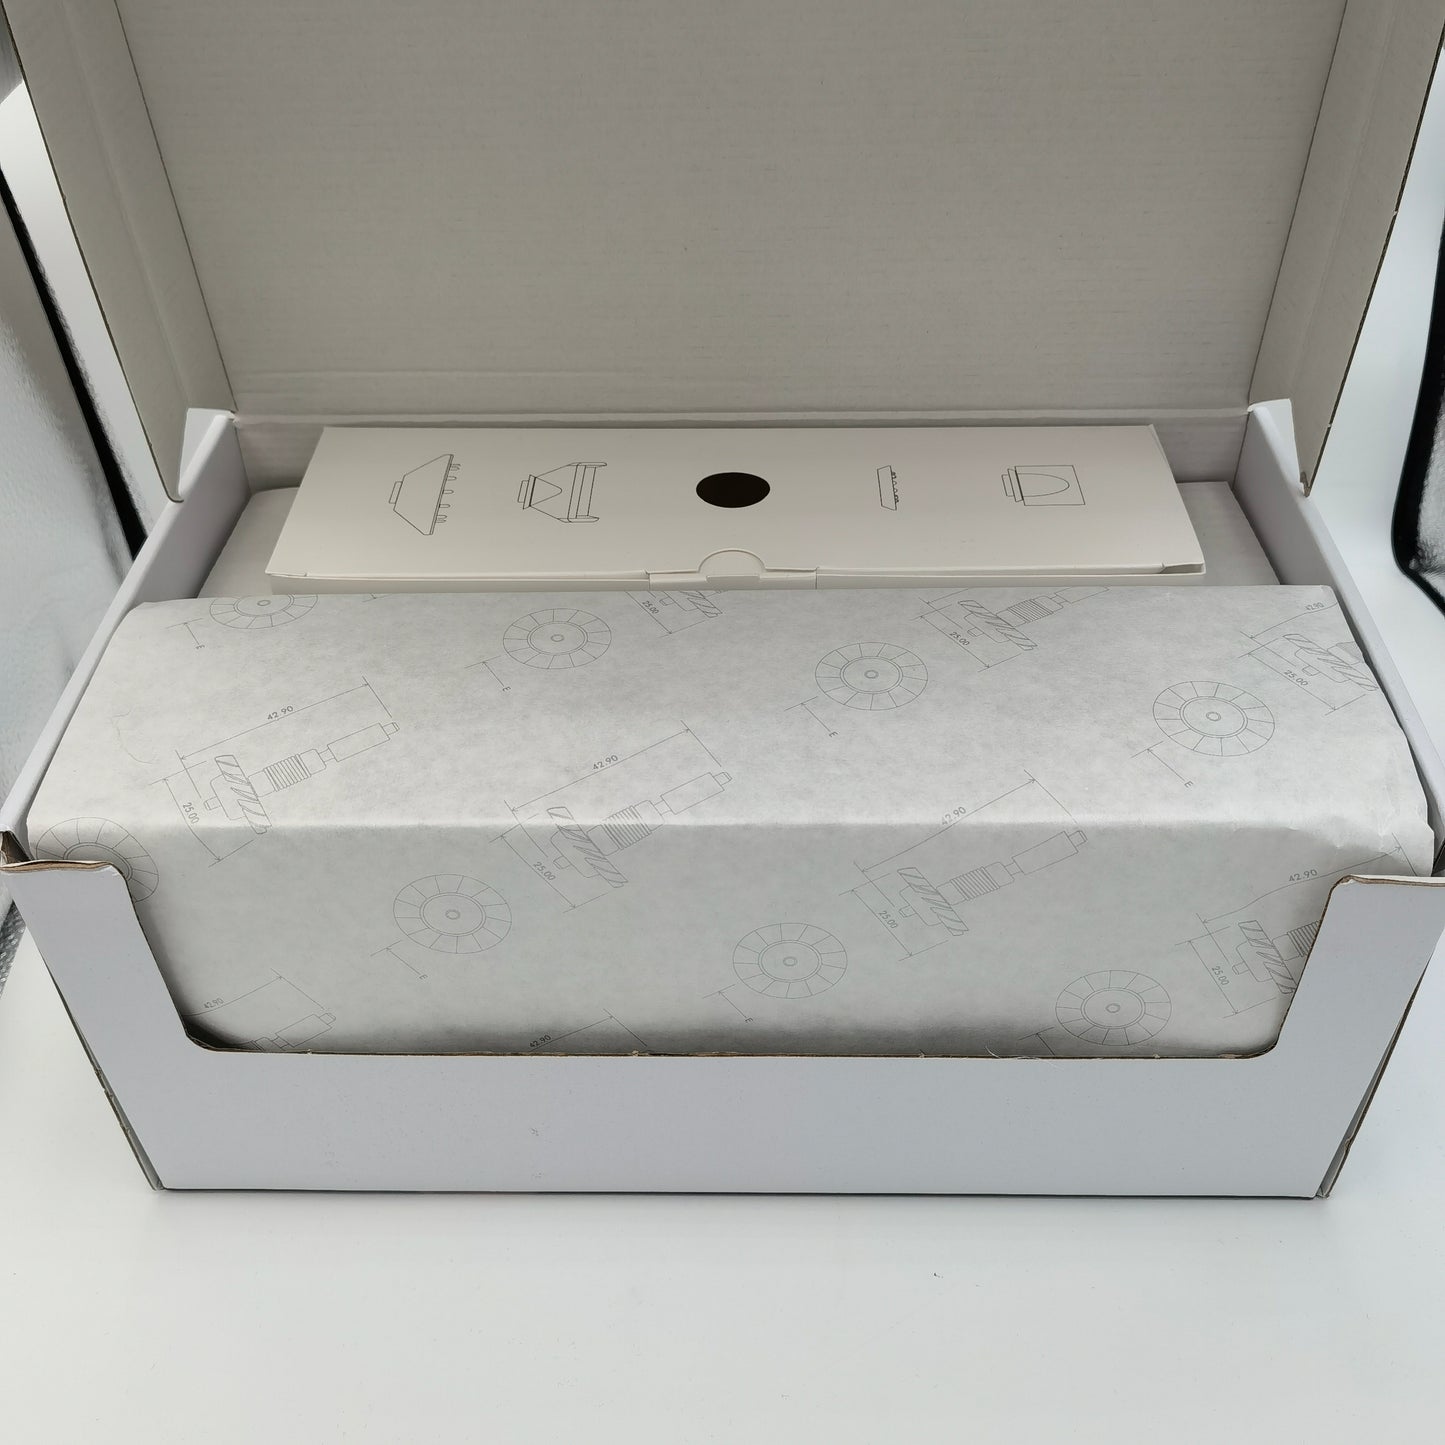 HD08 gift box European standard